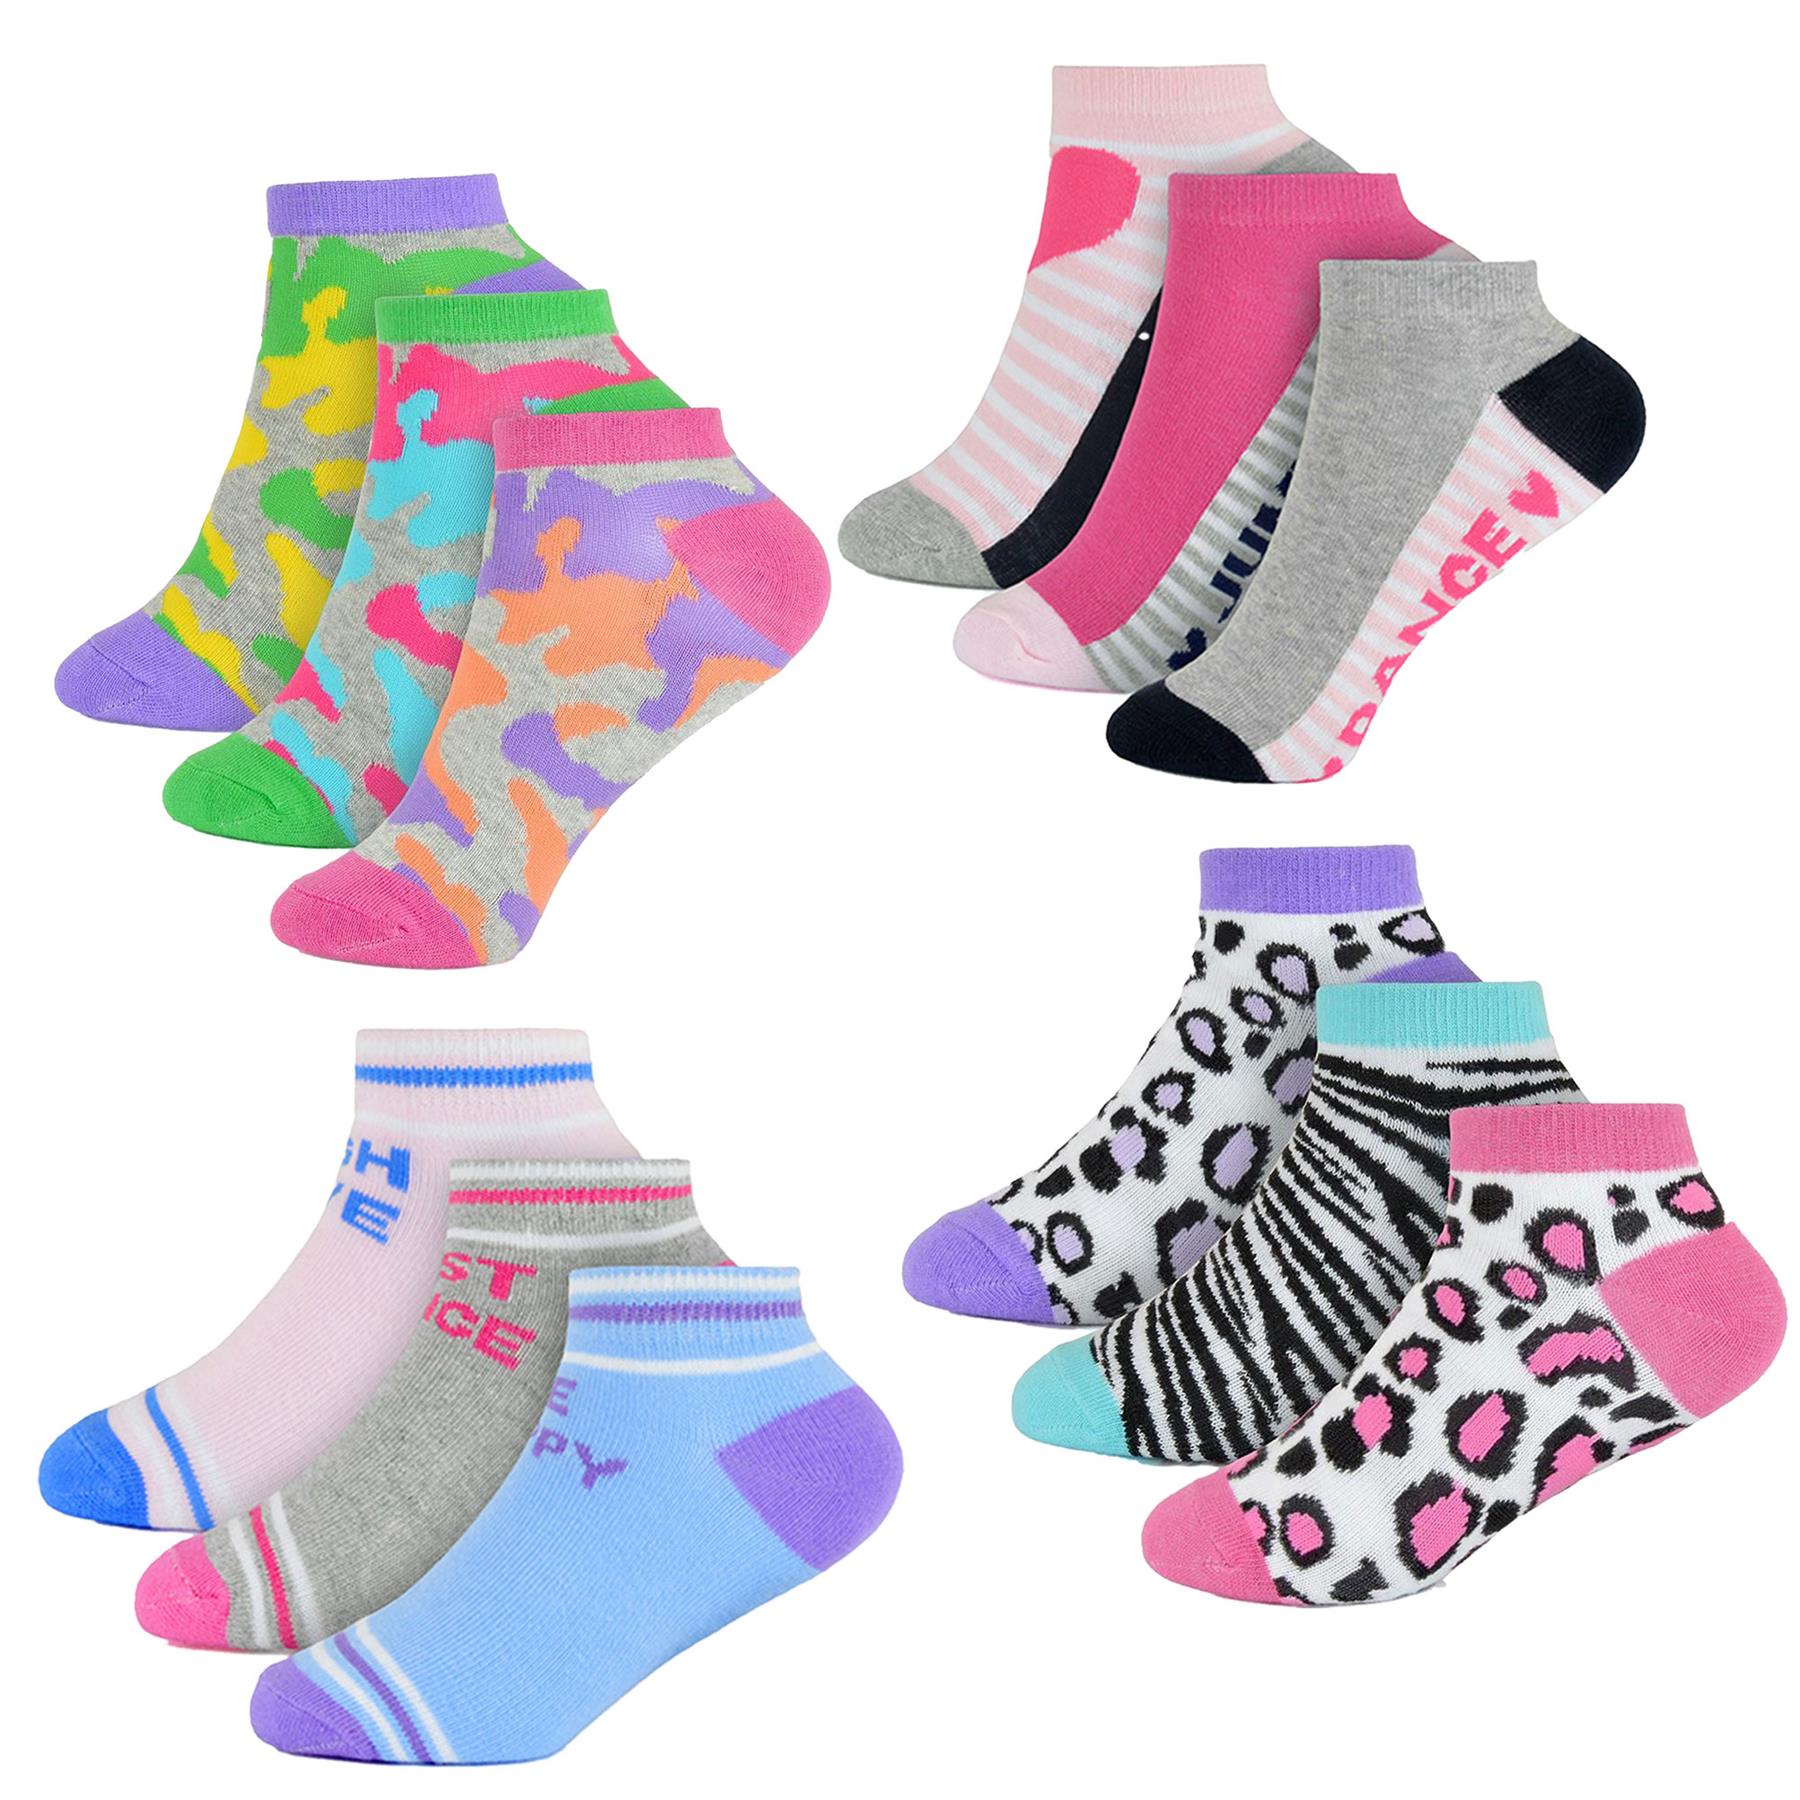 Kids Girls Camo And Leopard Trainer Socks Pack of 3 Kids Footwear Socks 2-10 Yr